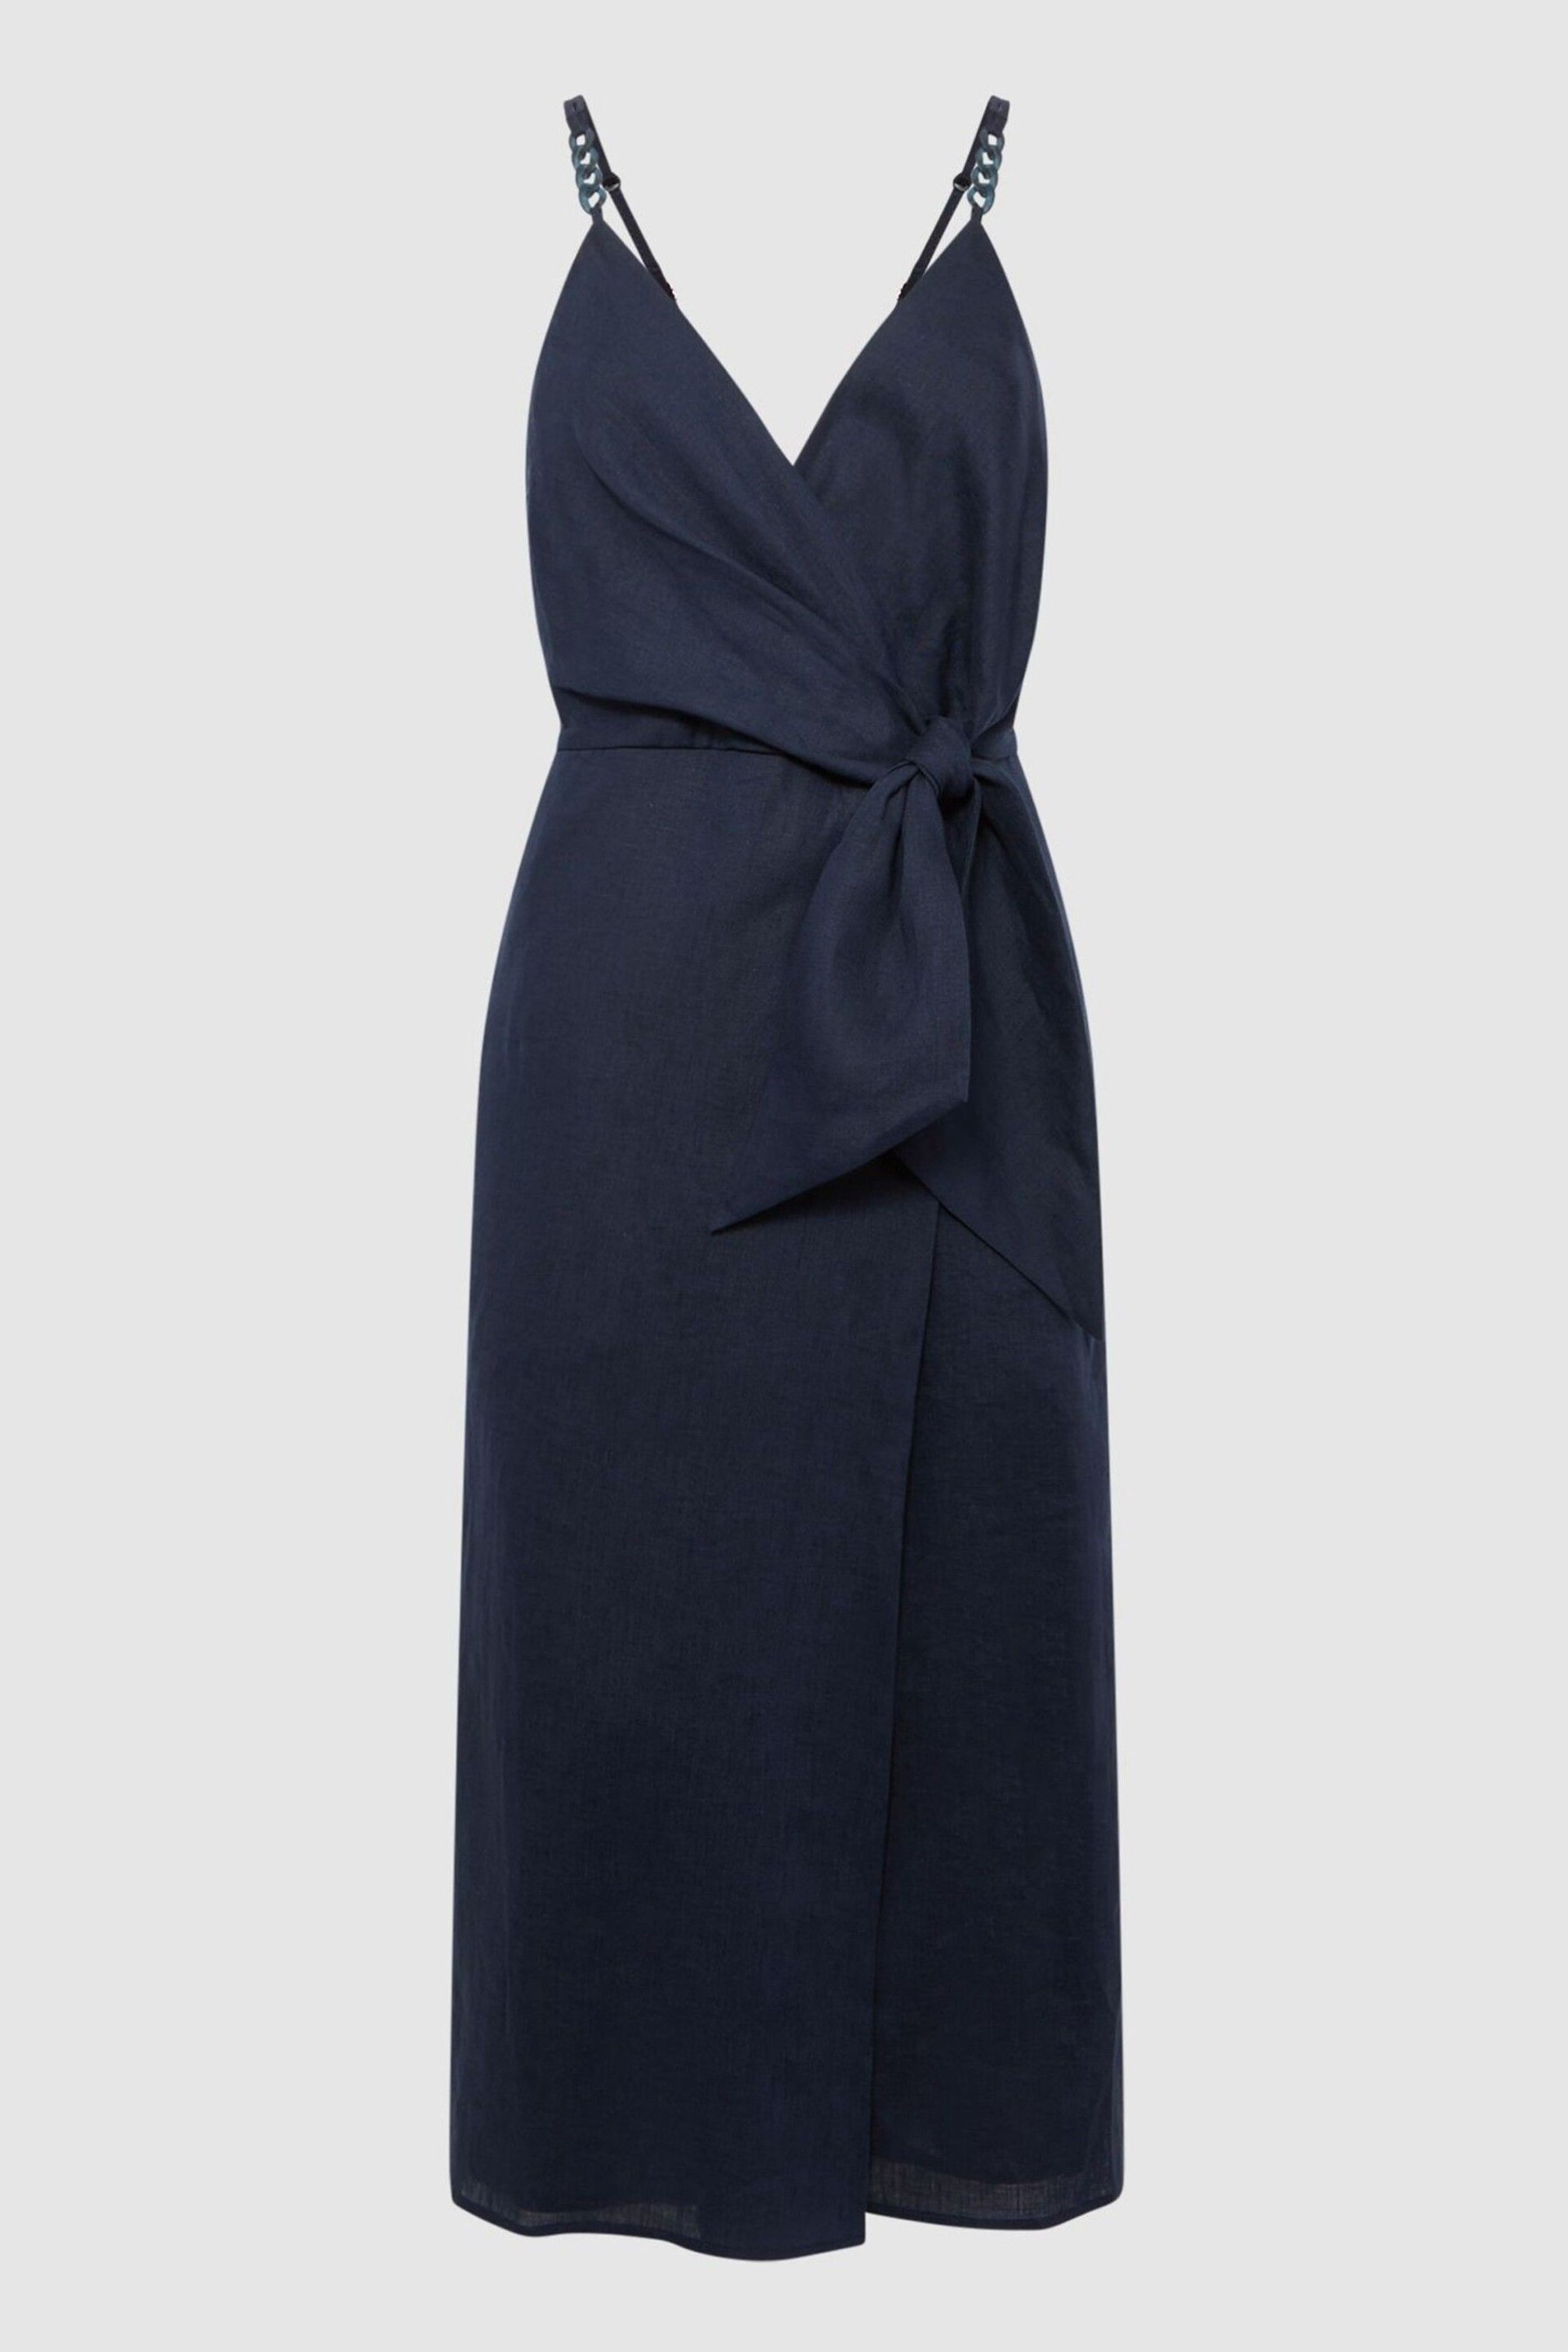 Reiss Navy Esme Linen Side Tie Midi Dress - Image 2 of 6